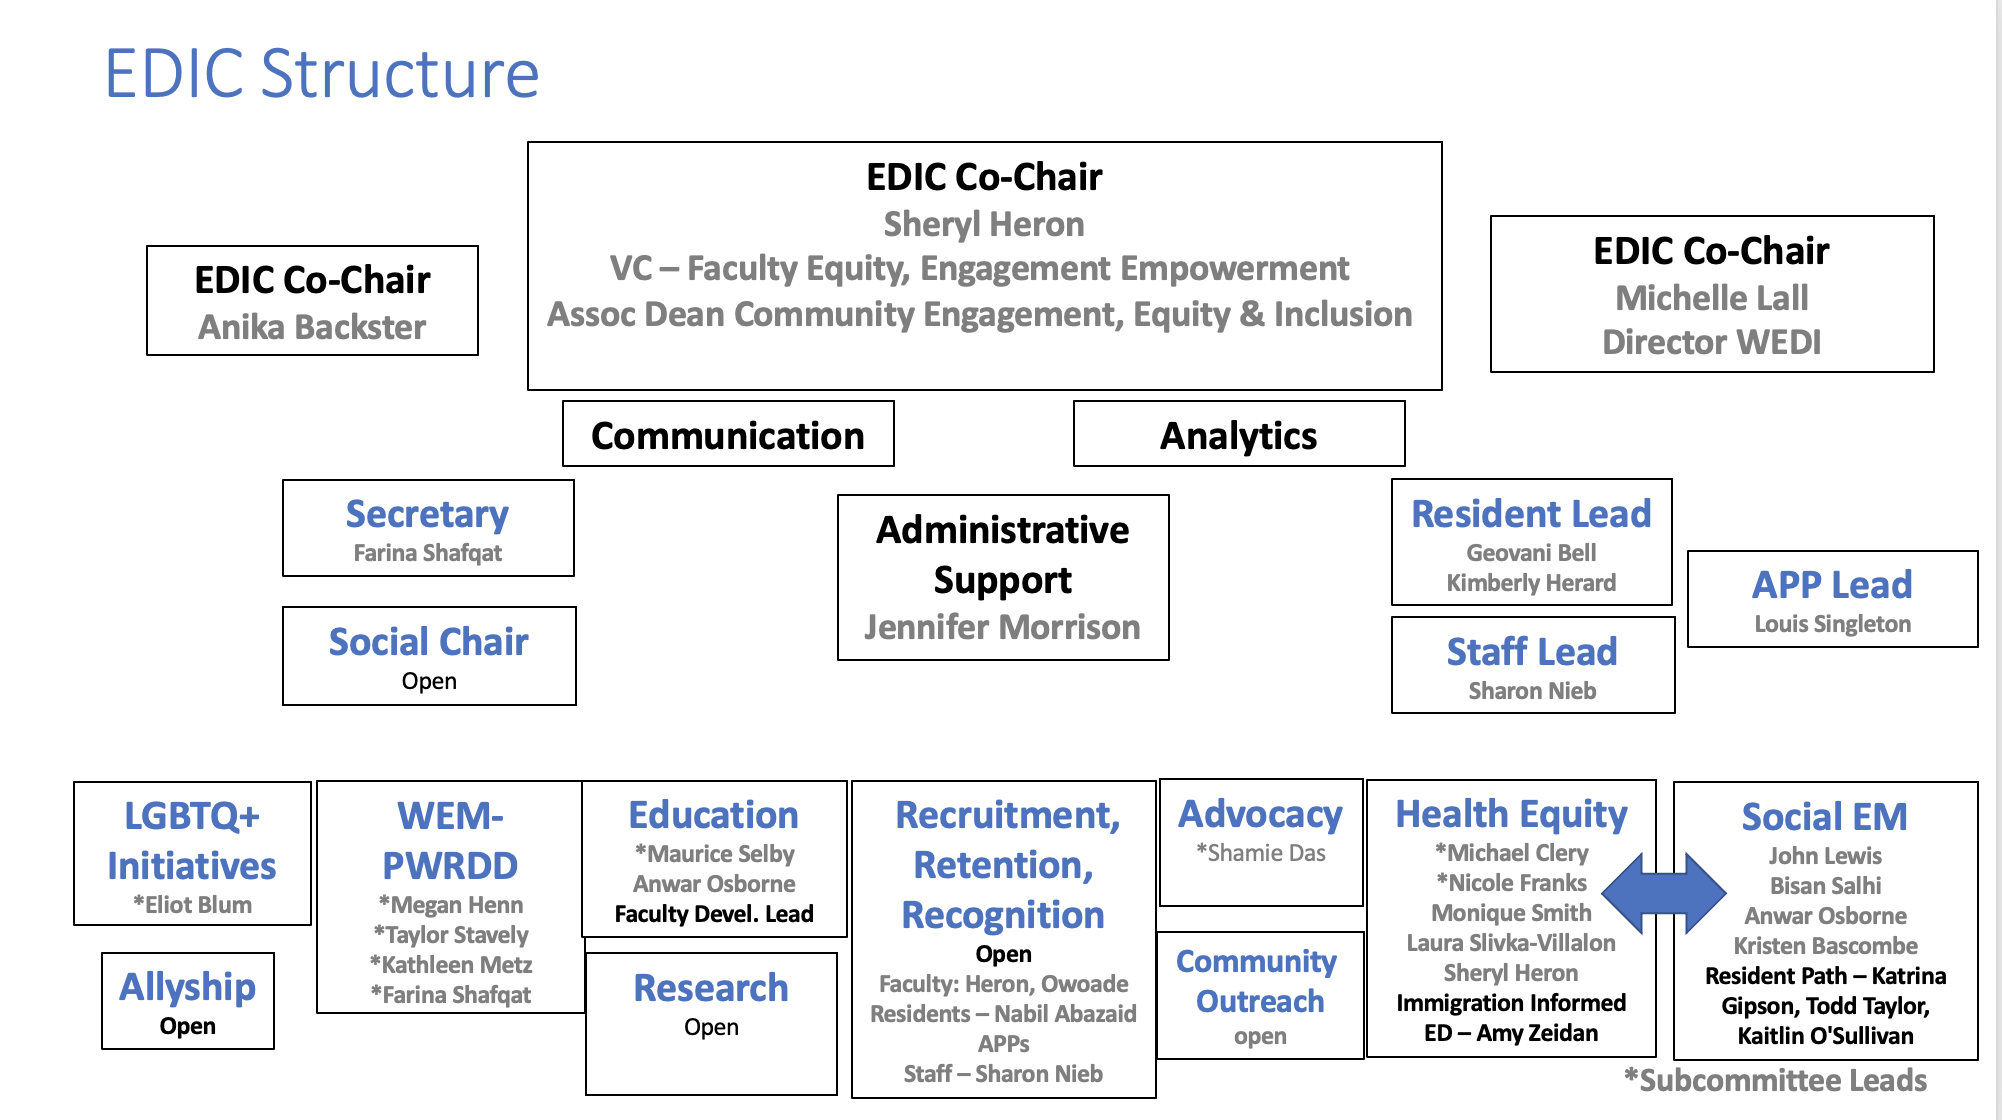 EDIC Leadership and Committees